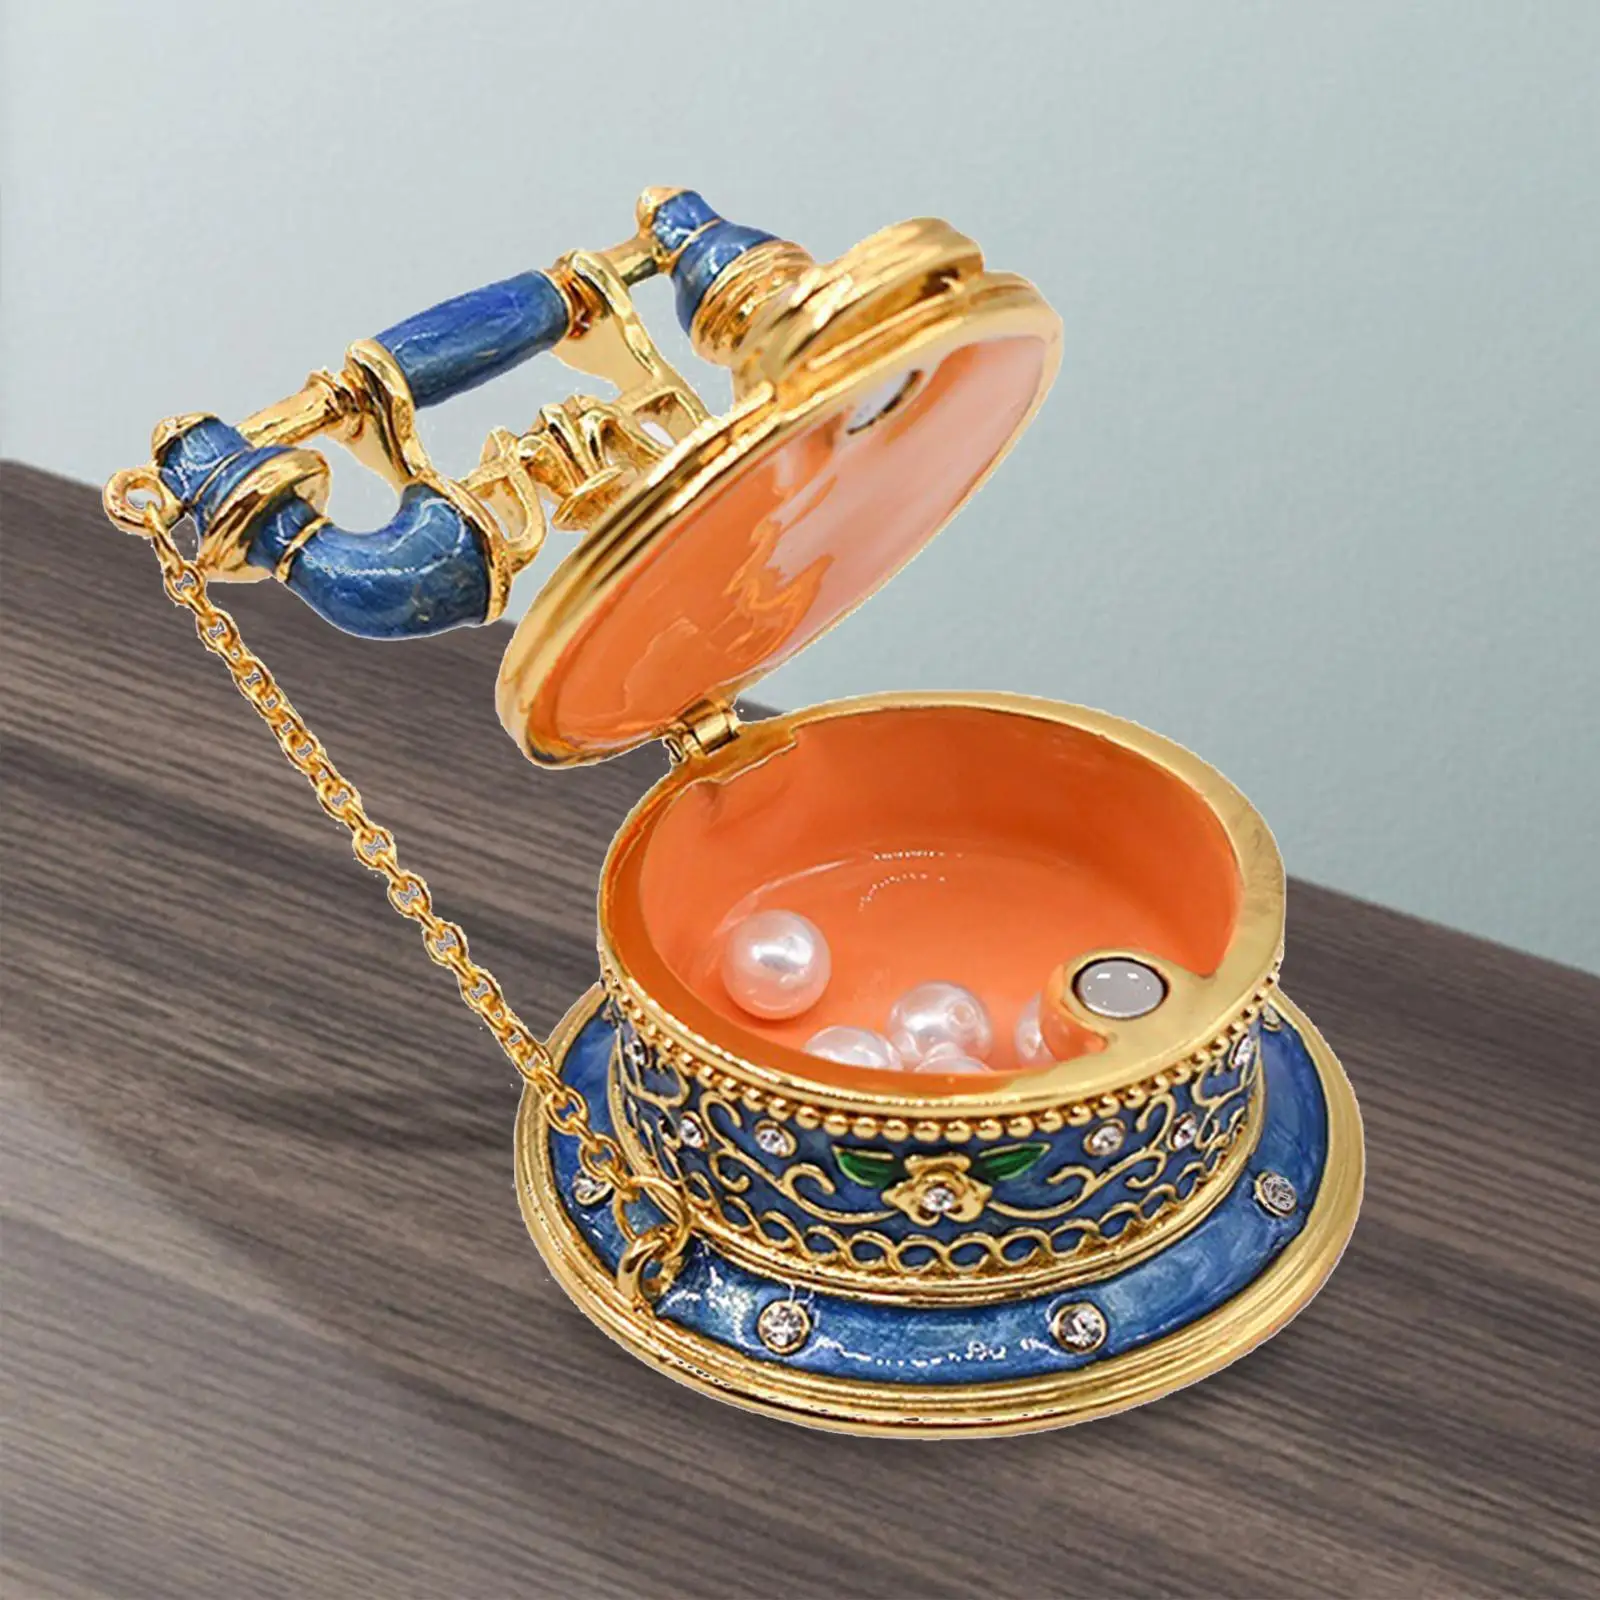 Vintage Telephone Jewelry Box Trinket Box Decoration Ornaments Enameled Home Decor Gift Treasure Chest for Ring Holder Bracelet